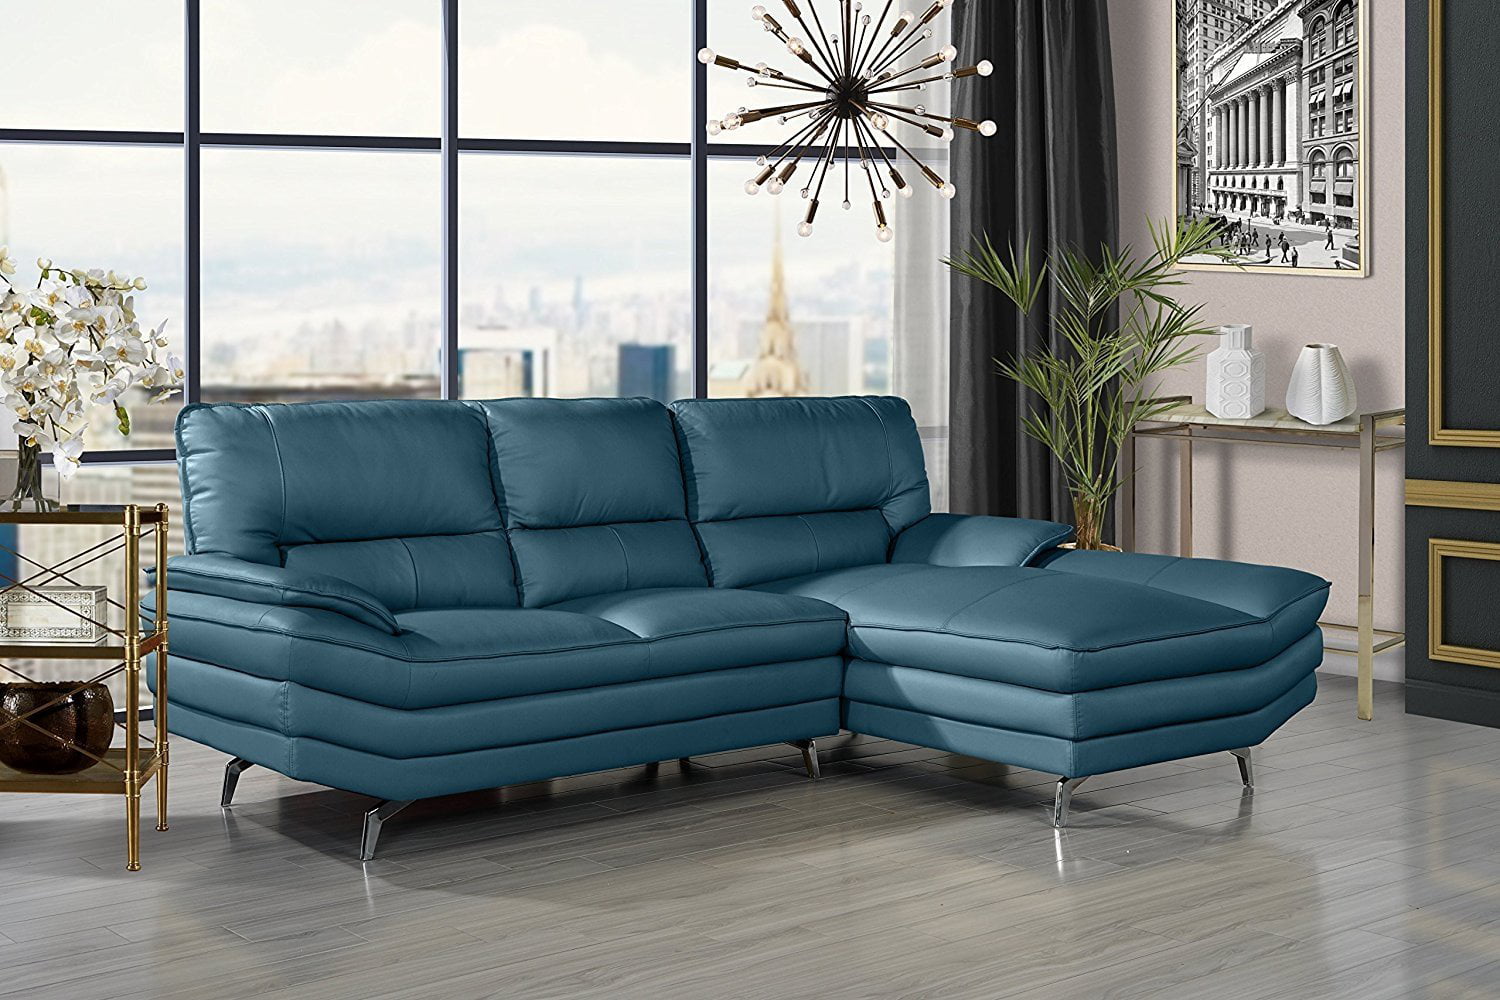 teal leather sofa ebay